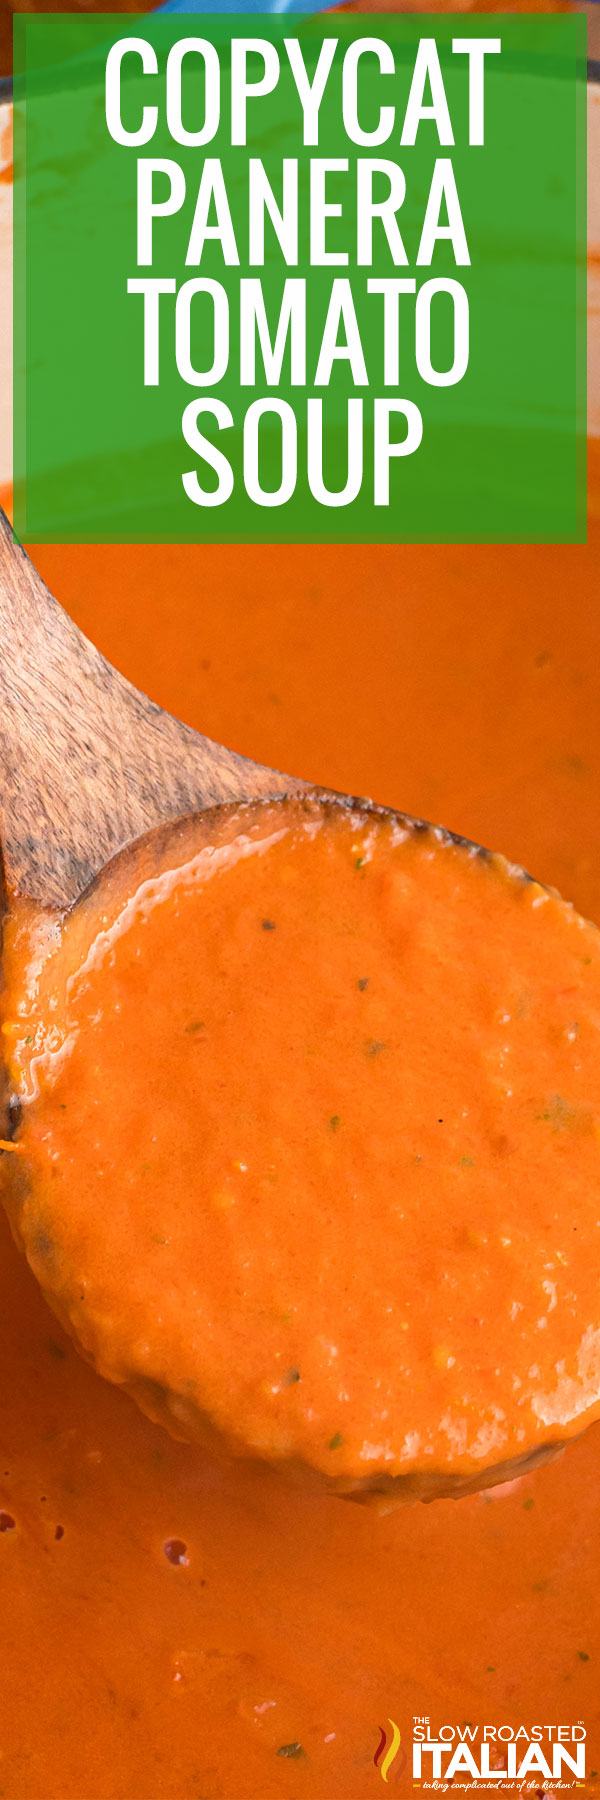 Copycat Panera Tomato Soup - PIN